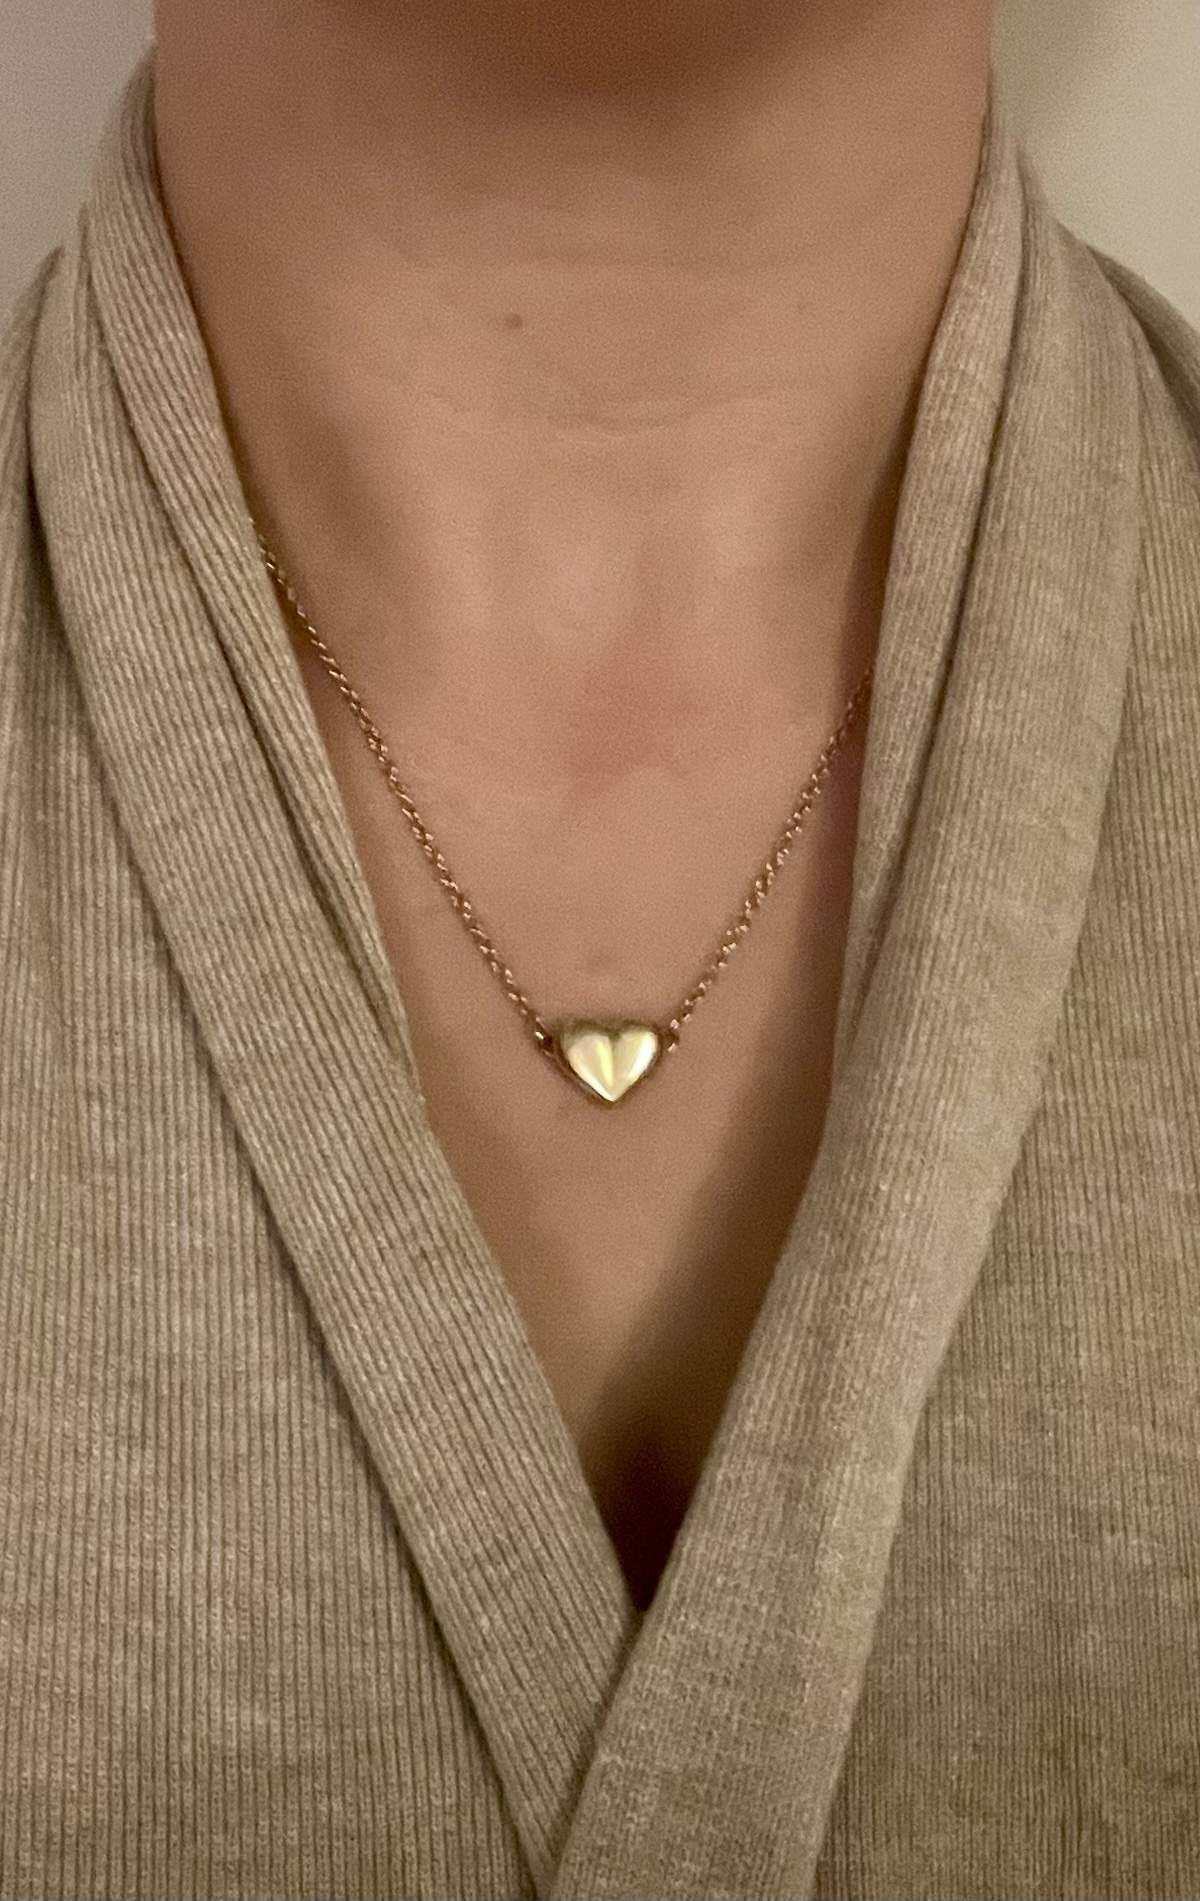 Heart pendant on chain